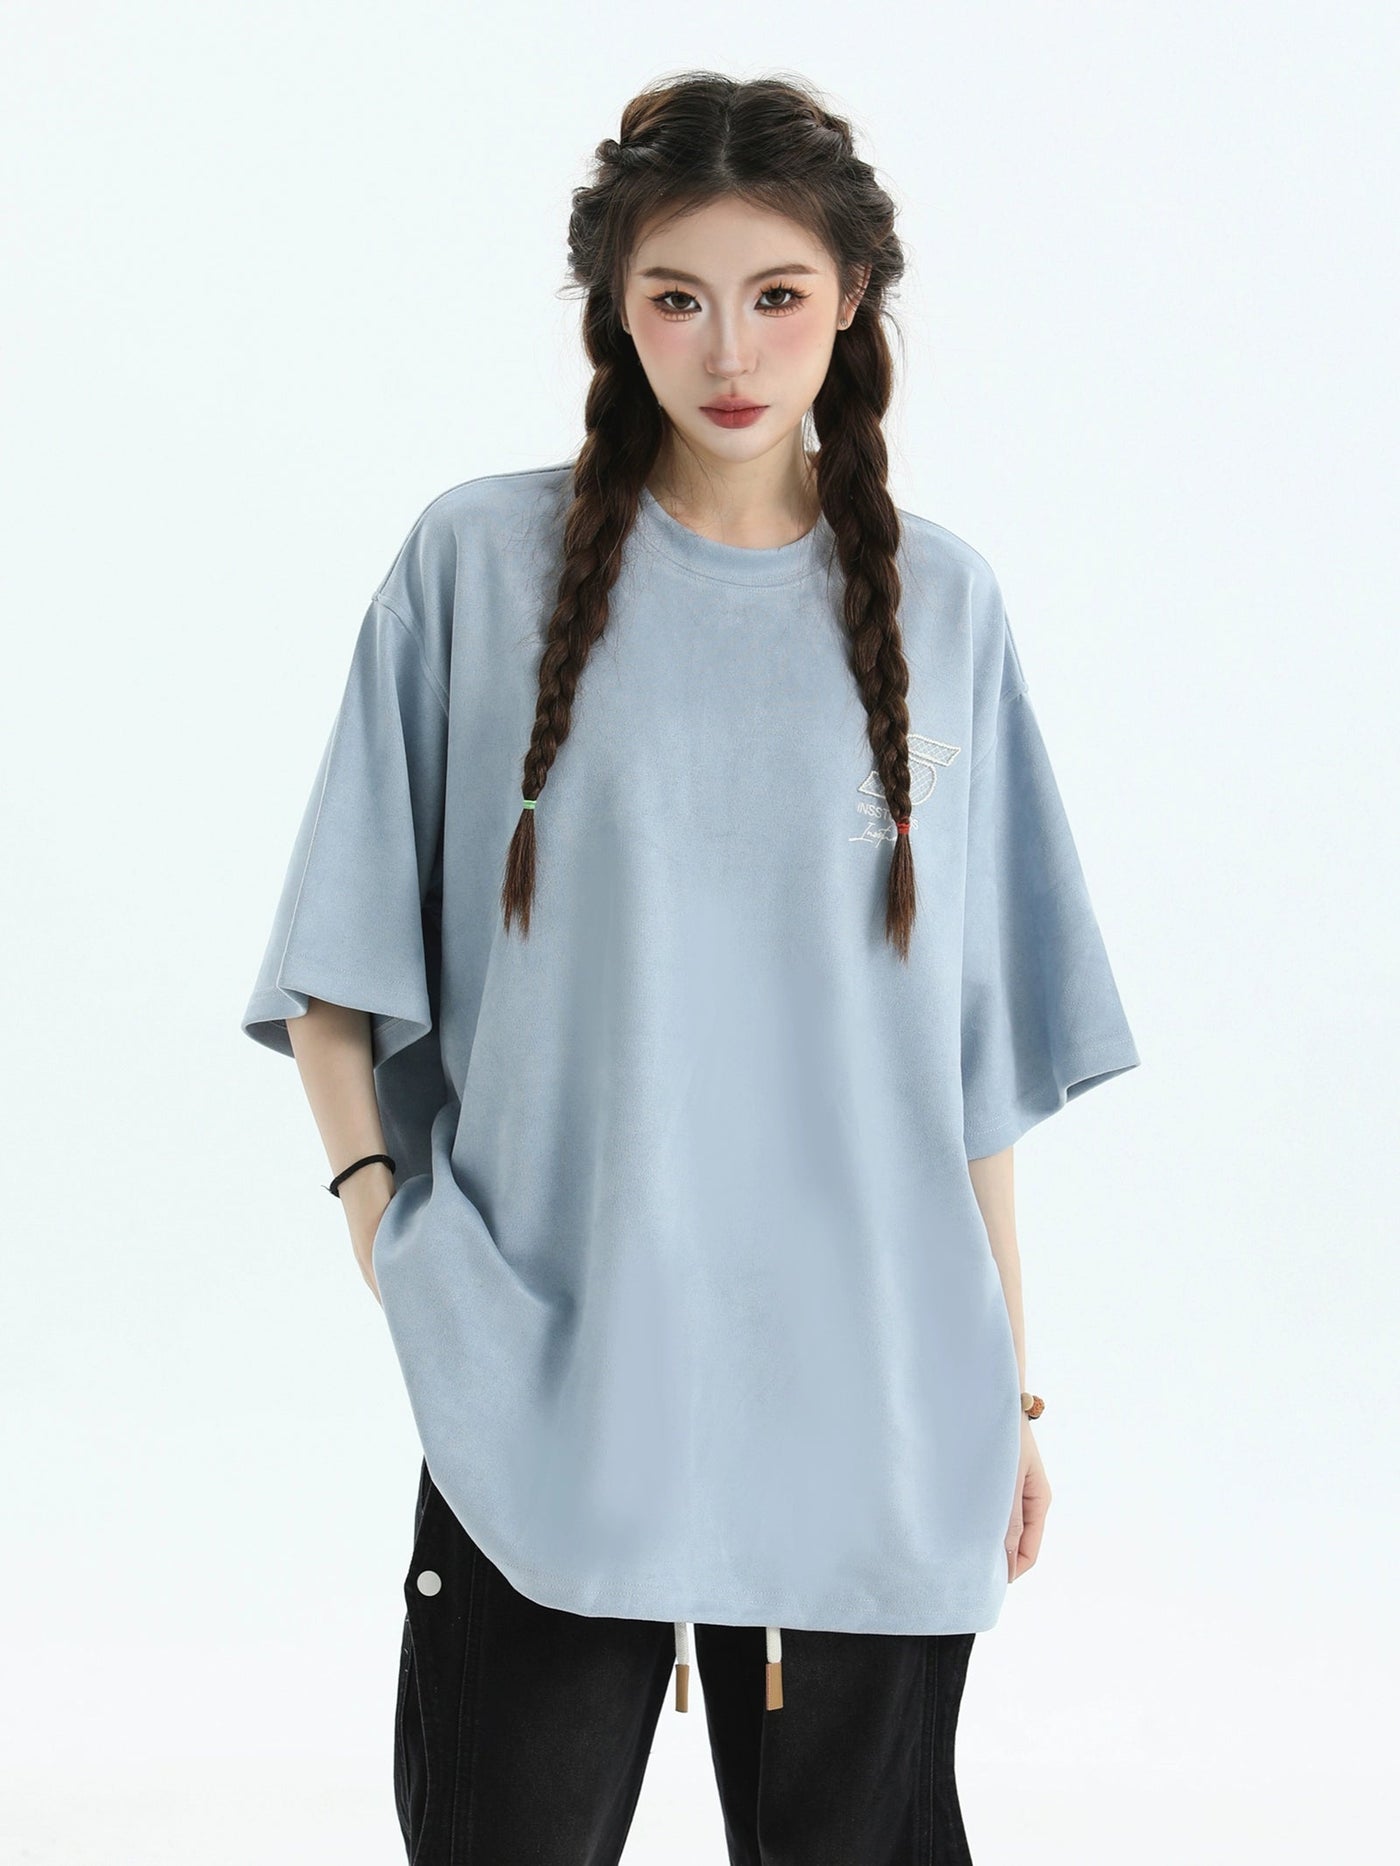 Stitched Logo Suede T-Shirt Korean Street Fashion T-Shirt By INS Korea Shop Online at OH Vault